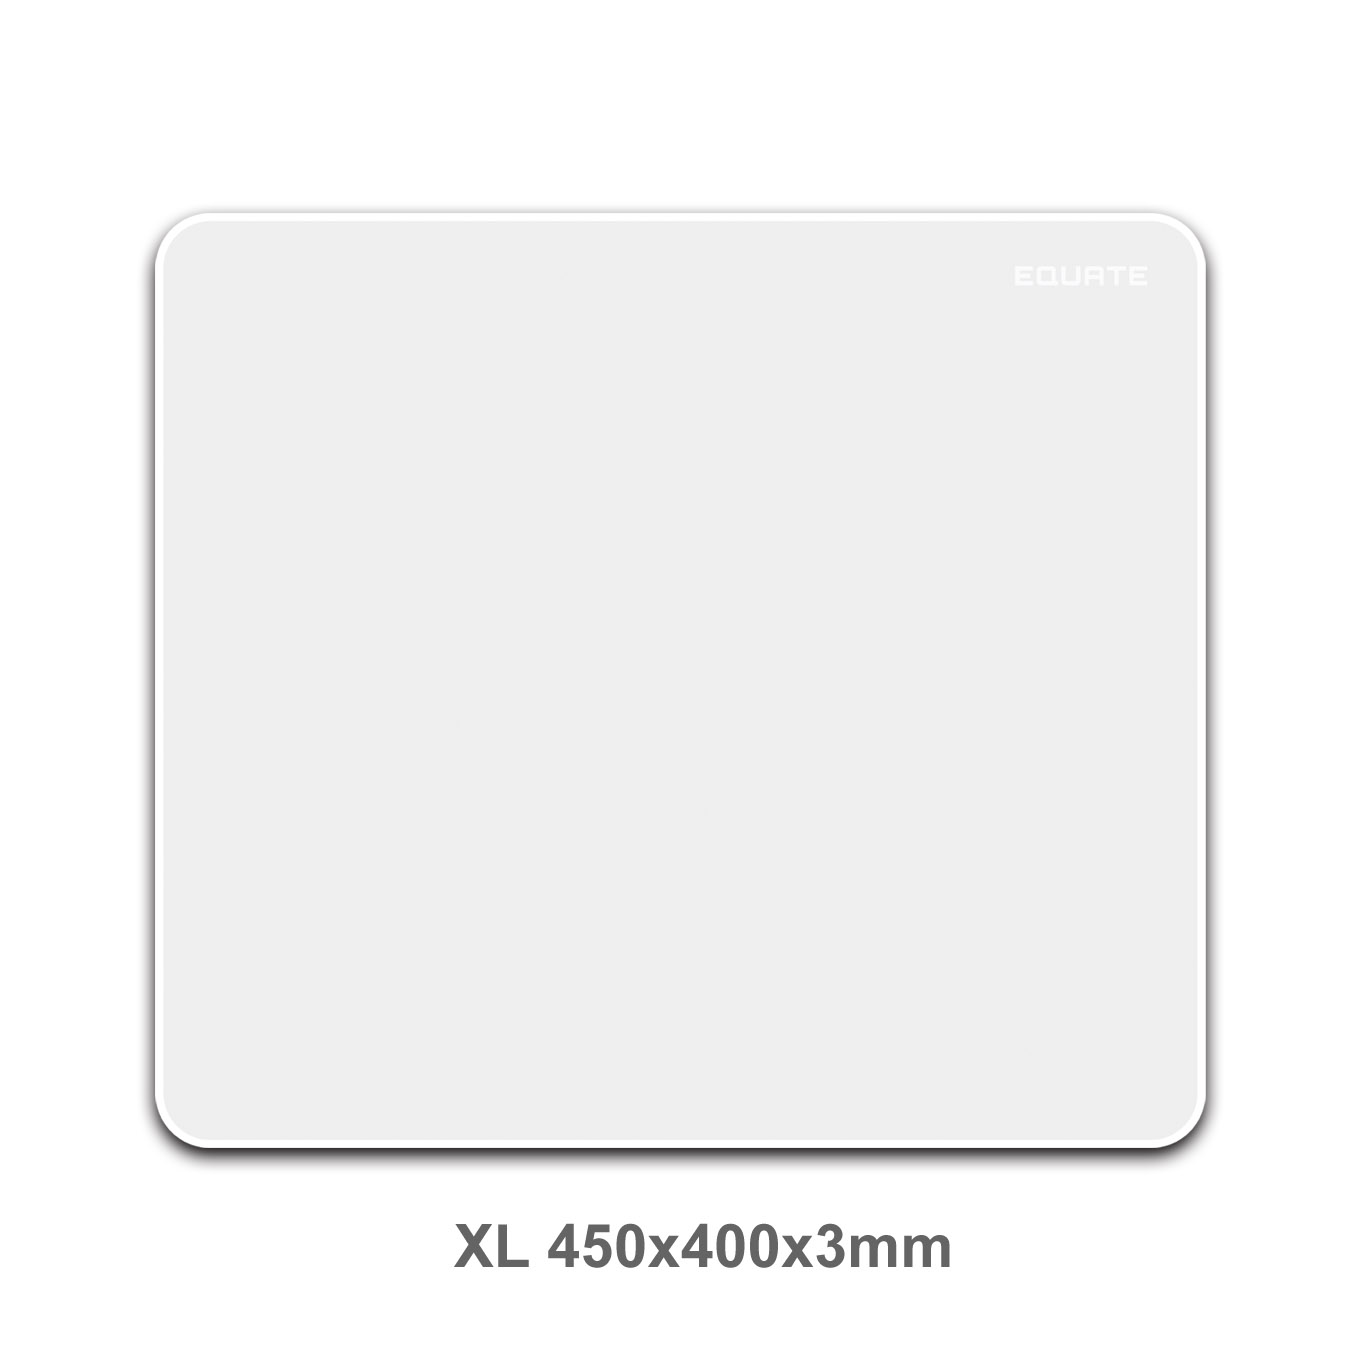 X-raypad White Equate Gaming Mouse Pad – X-raypad